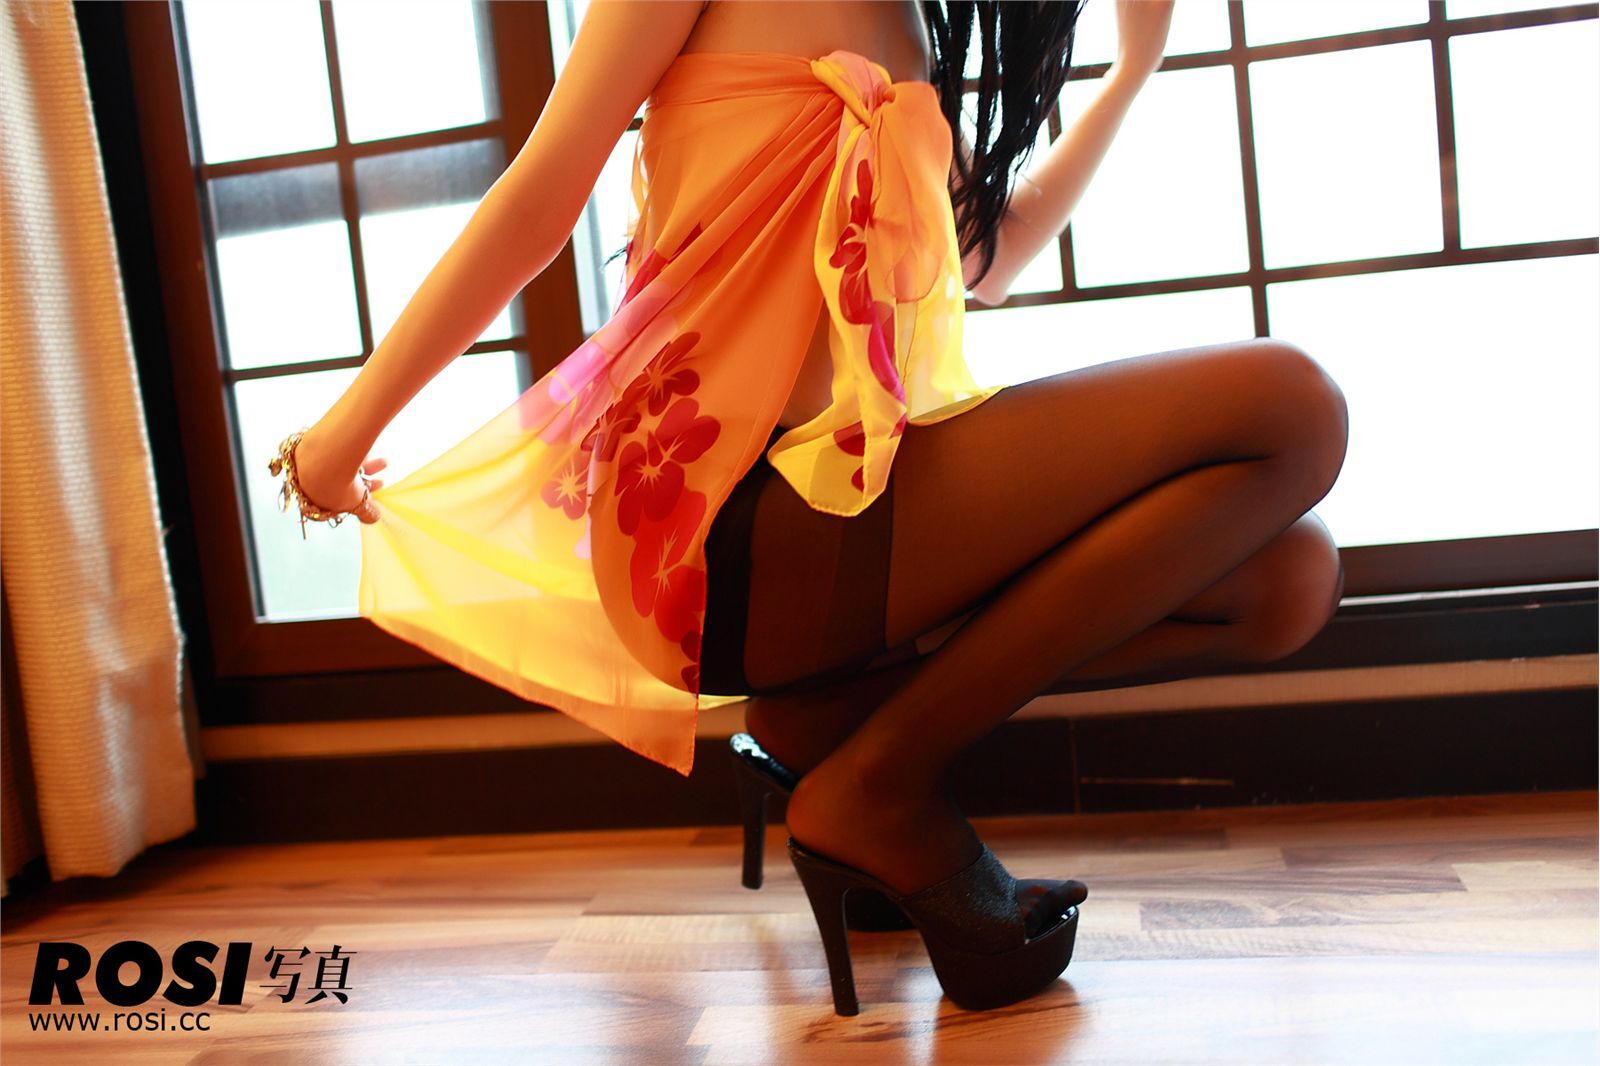 No.037 set of pictures of beautiful women in hazy silk stockings [ROSI photo album]